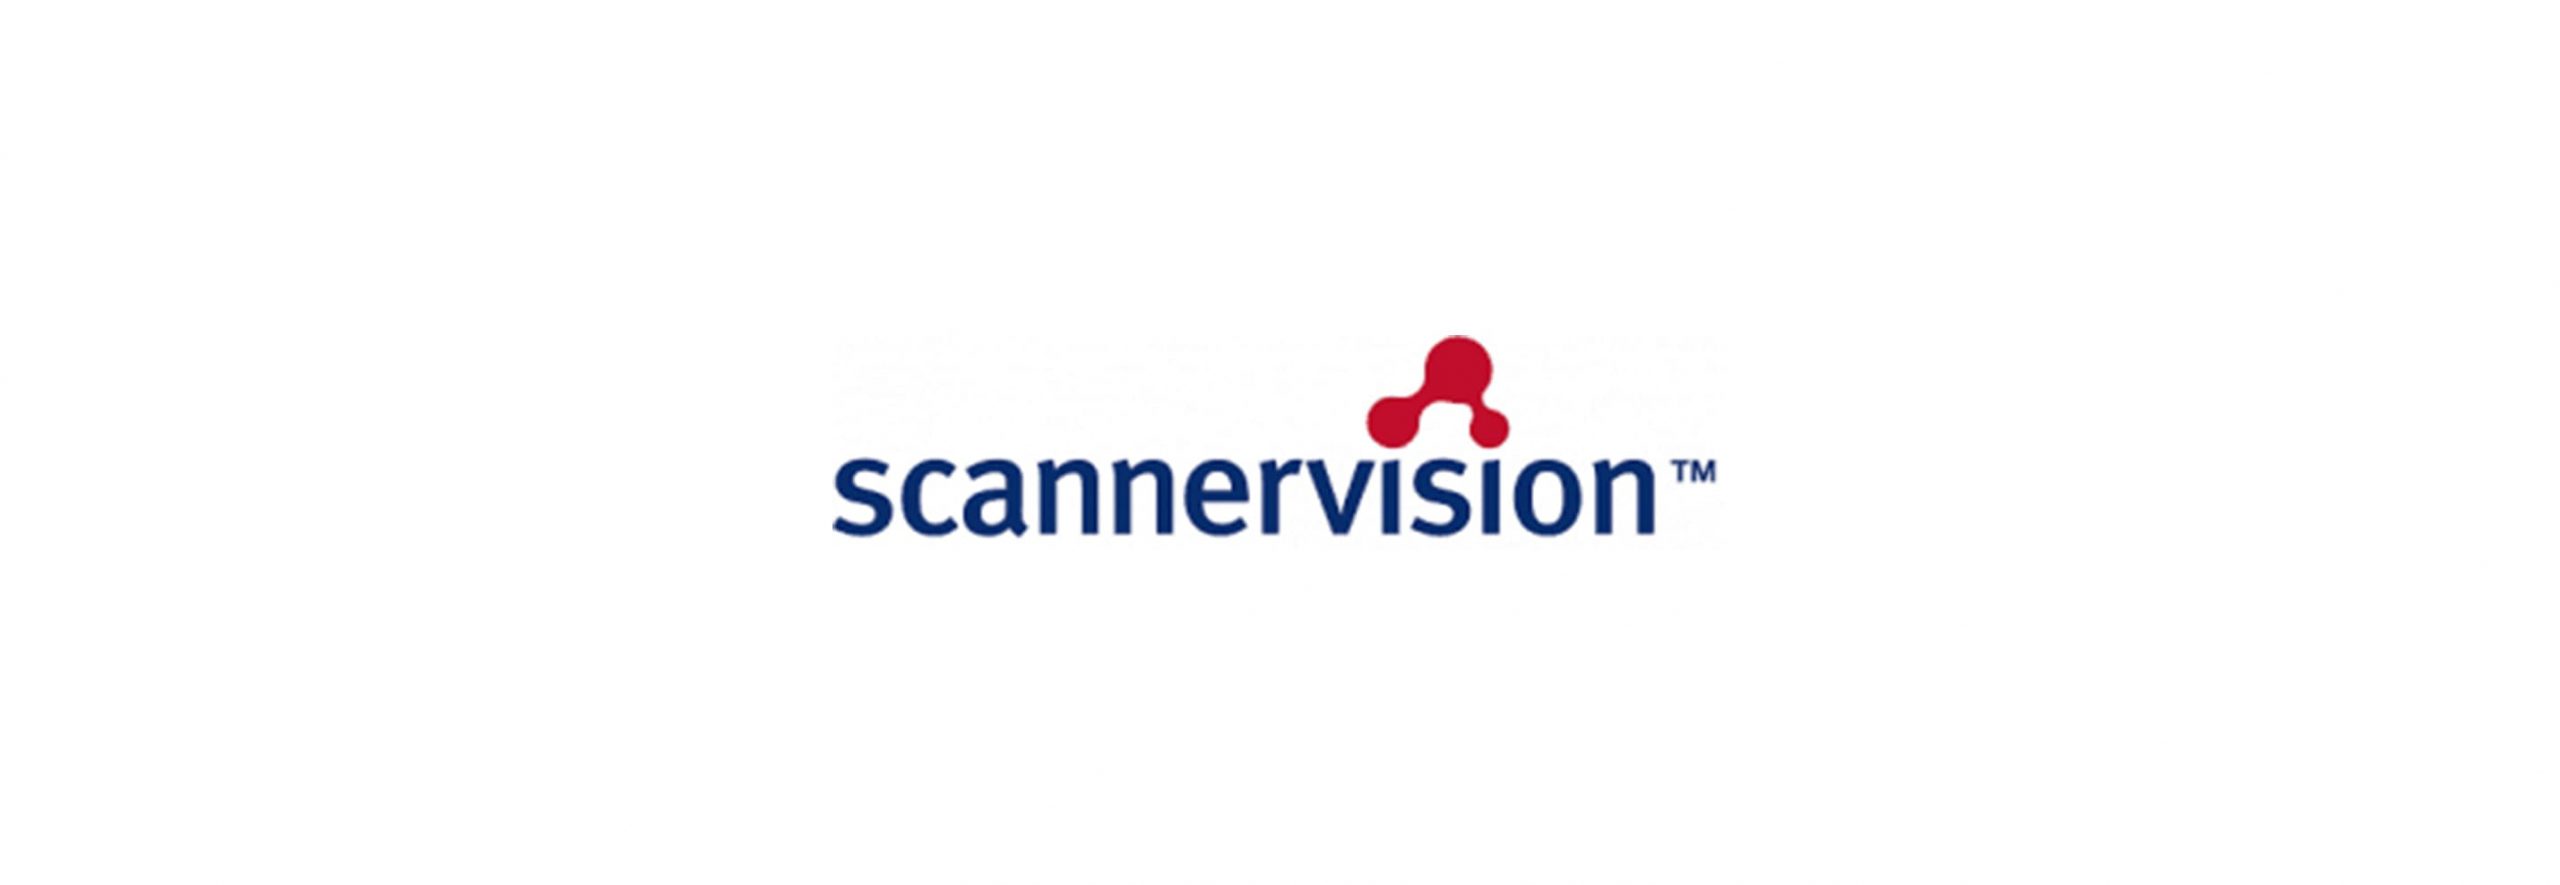 scannervision-min